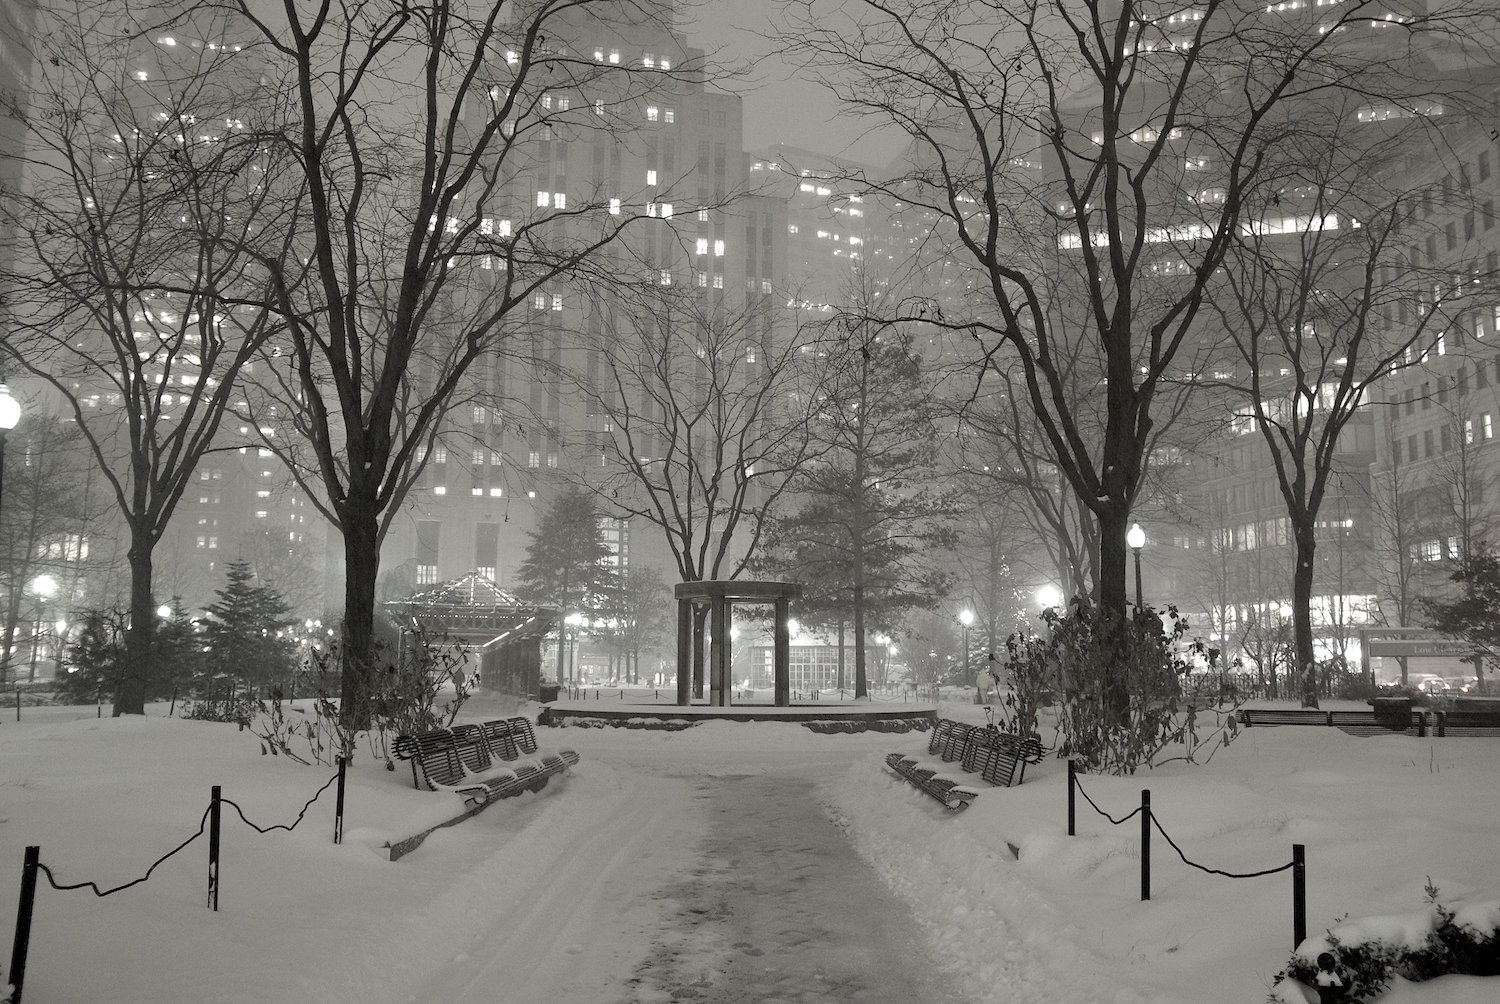 Boston in Winter